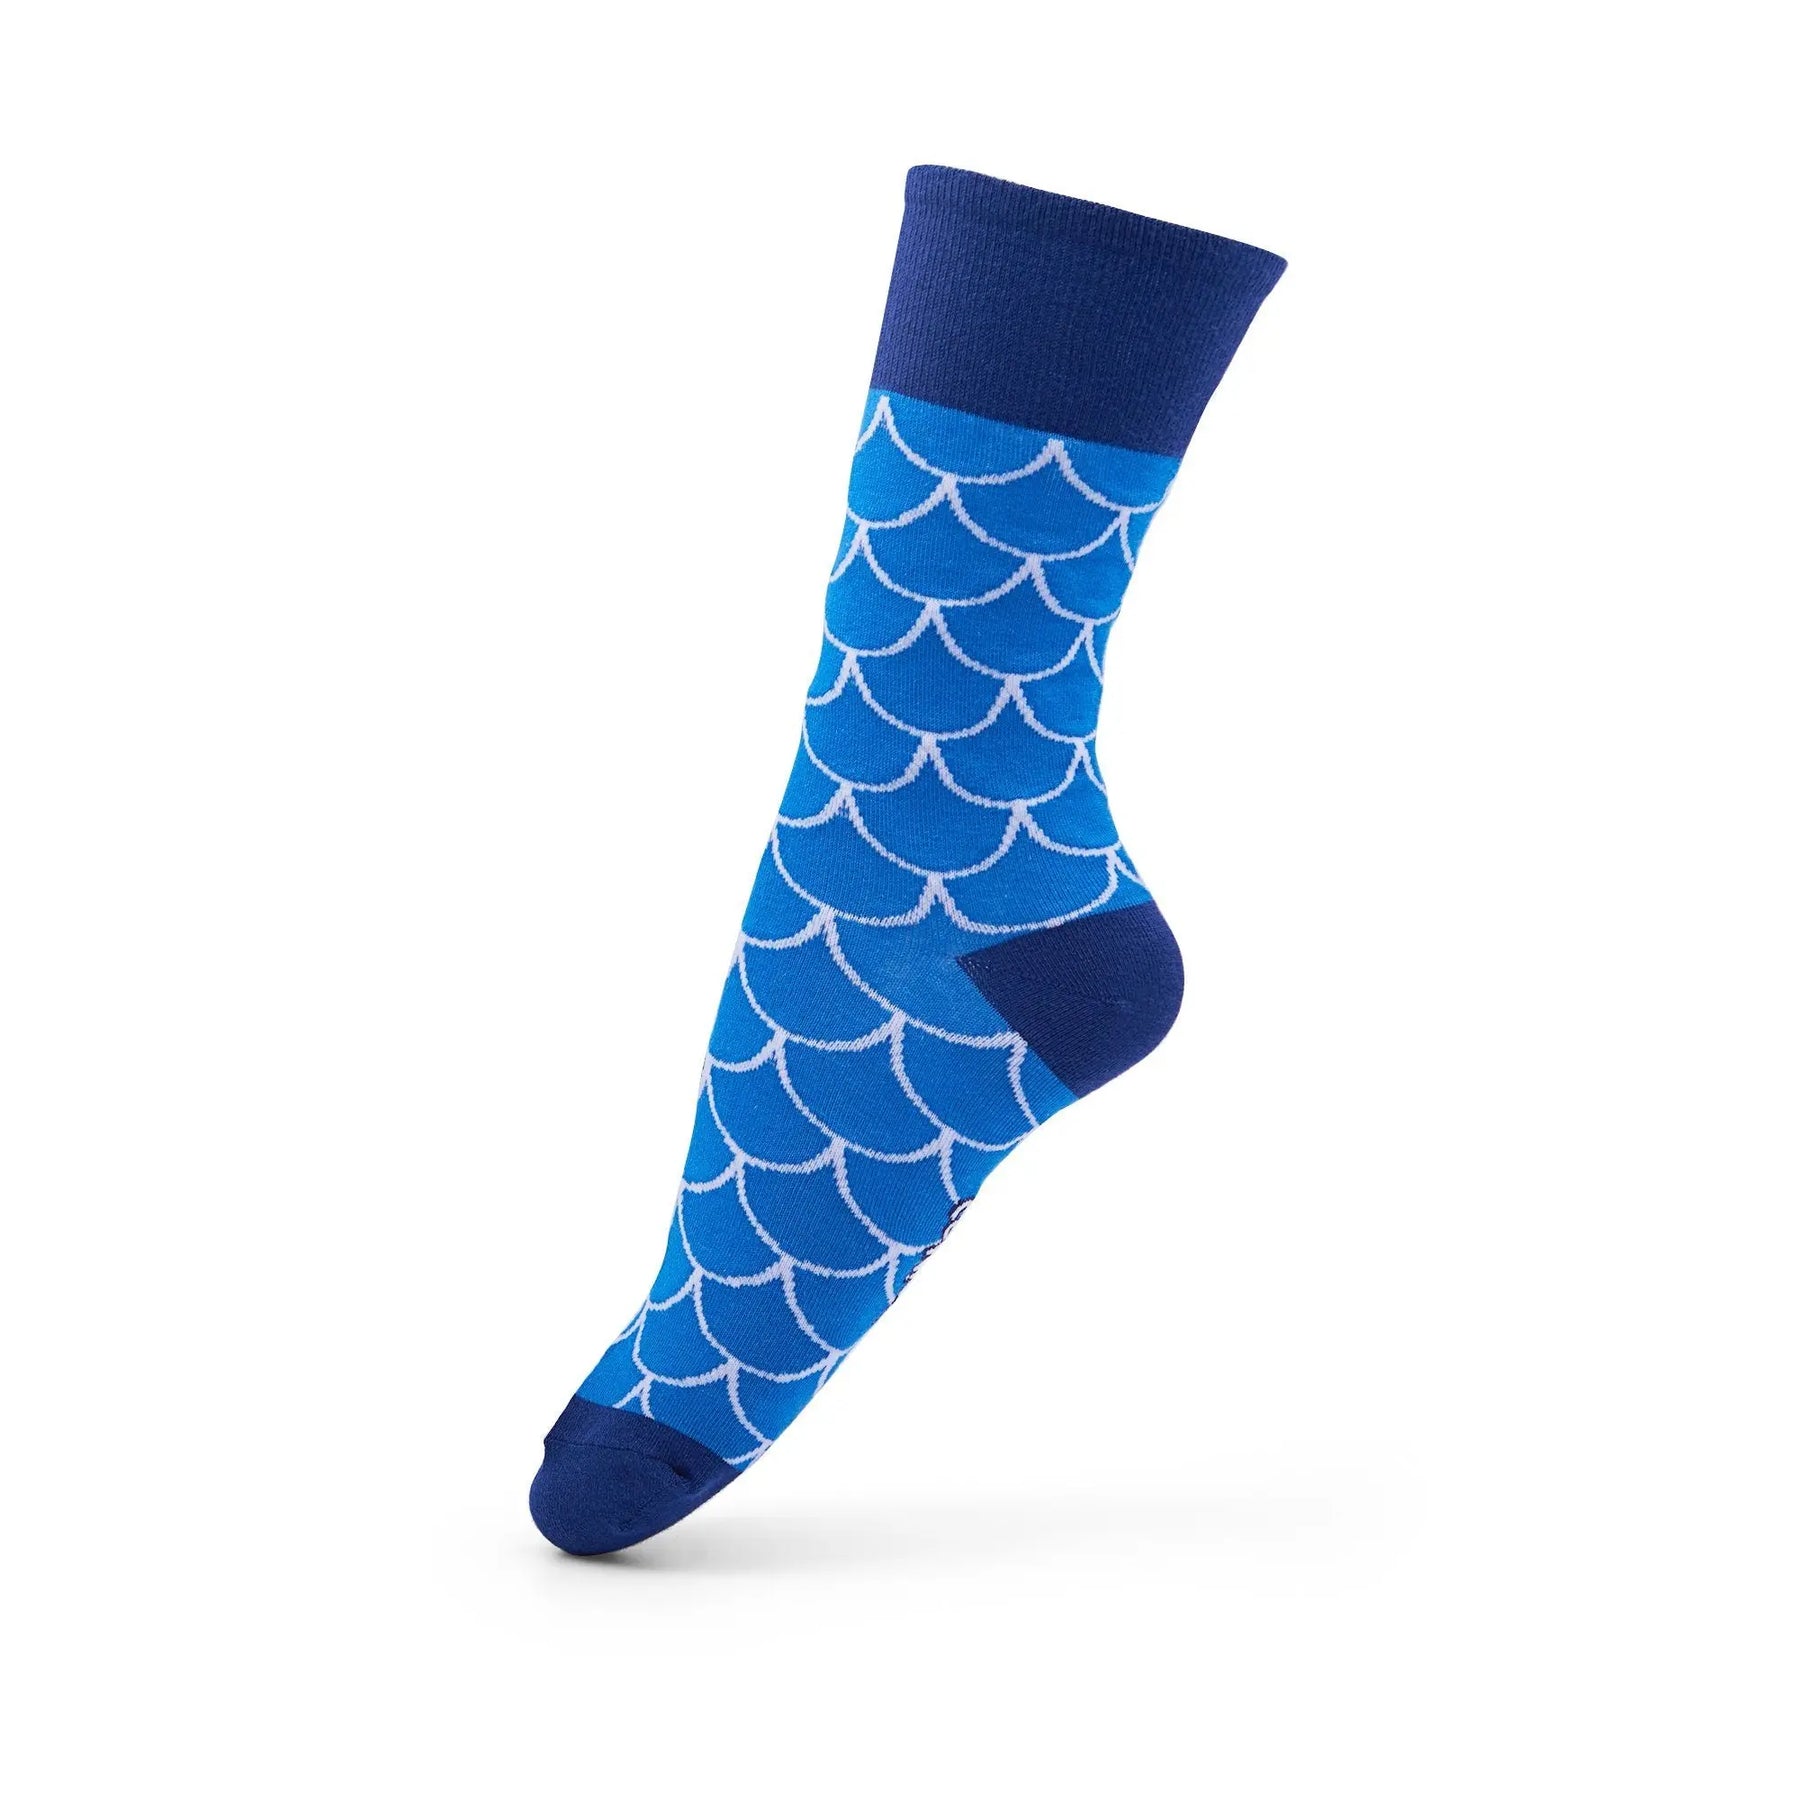 Coddies Fish Socks | Fishing Socks, Novelty Socks, Funny Socks, Crazy Socks